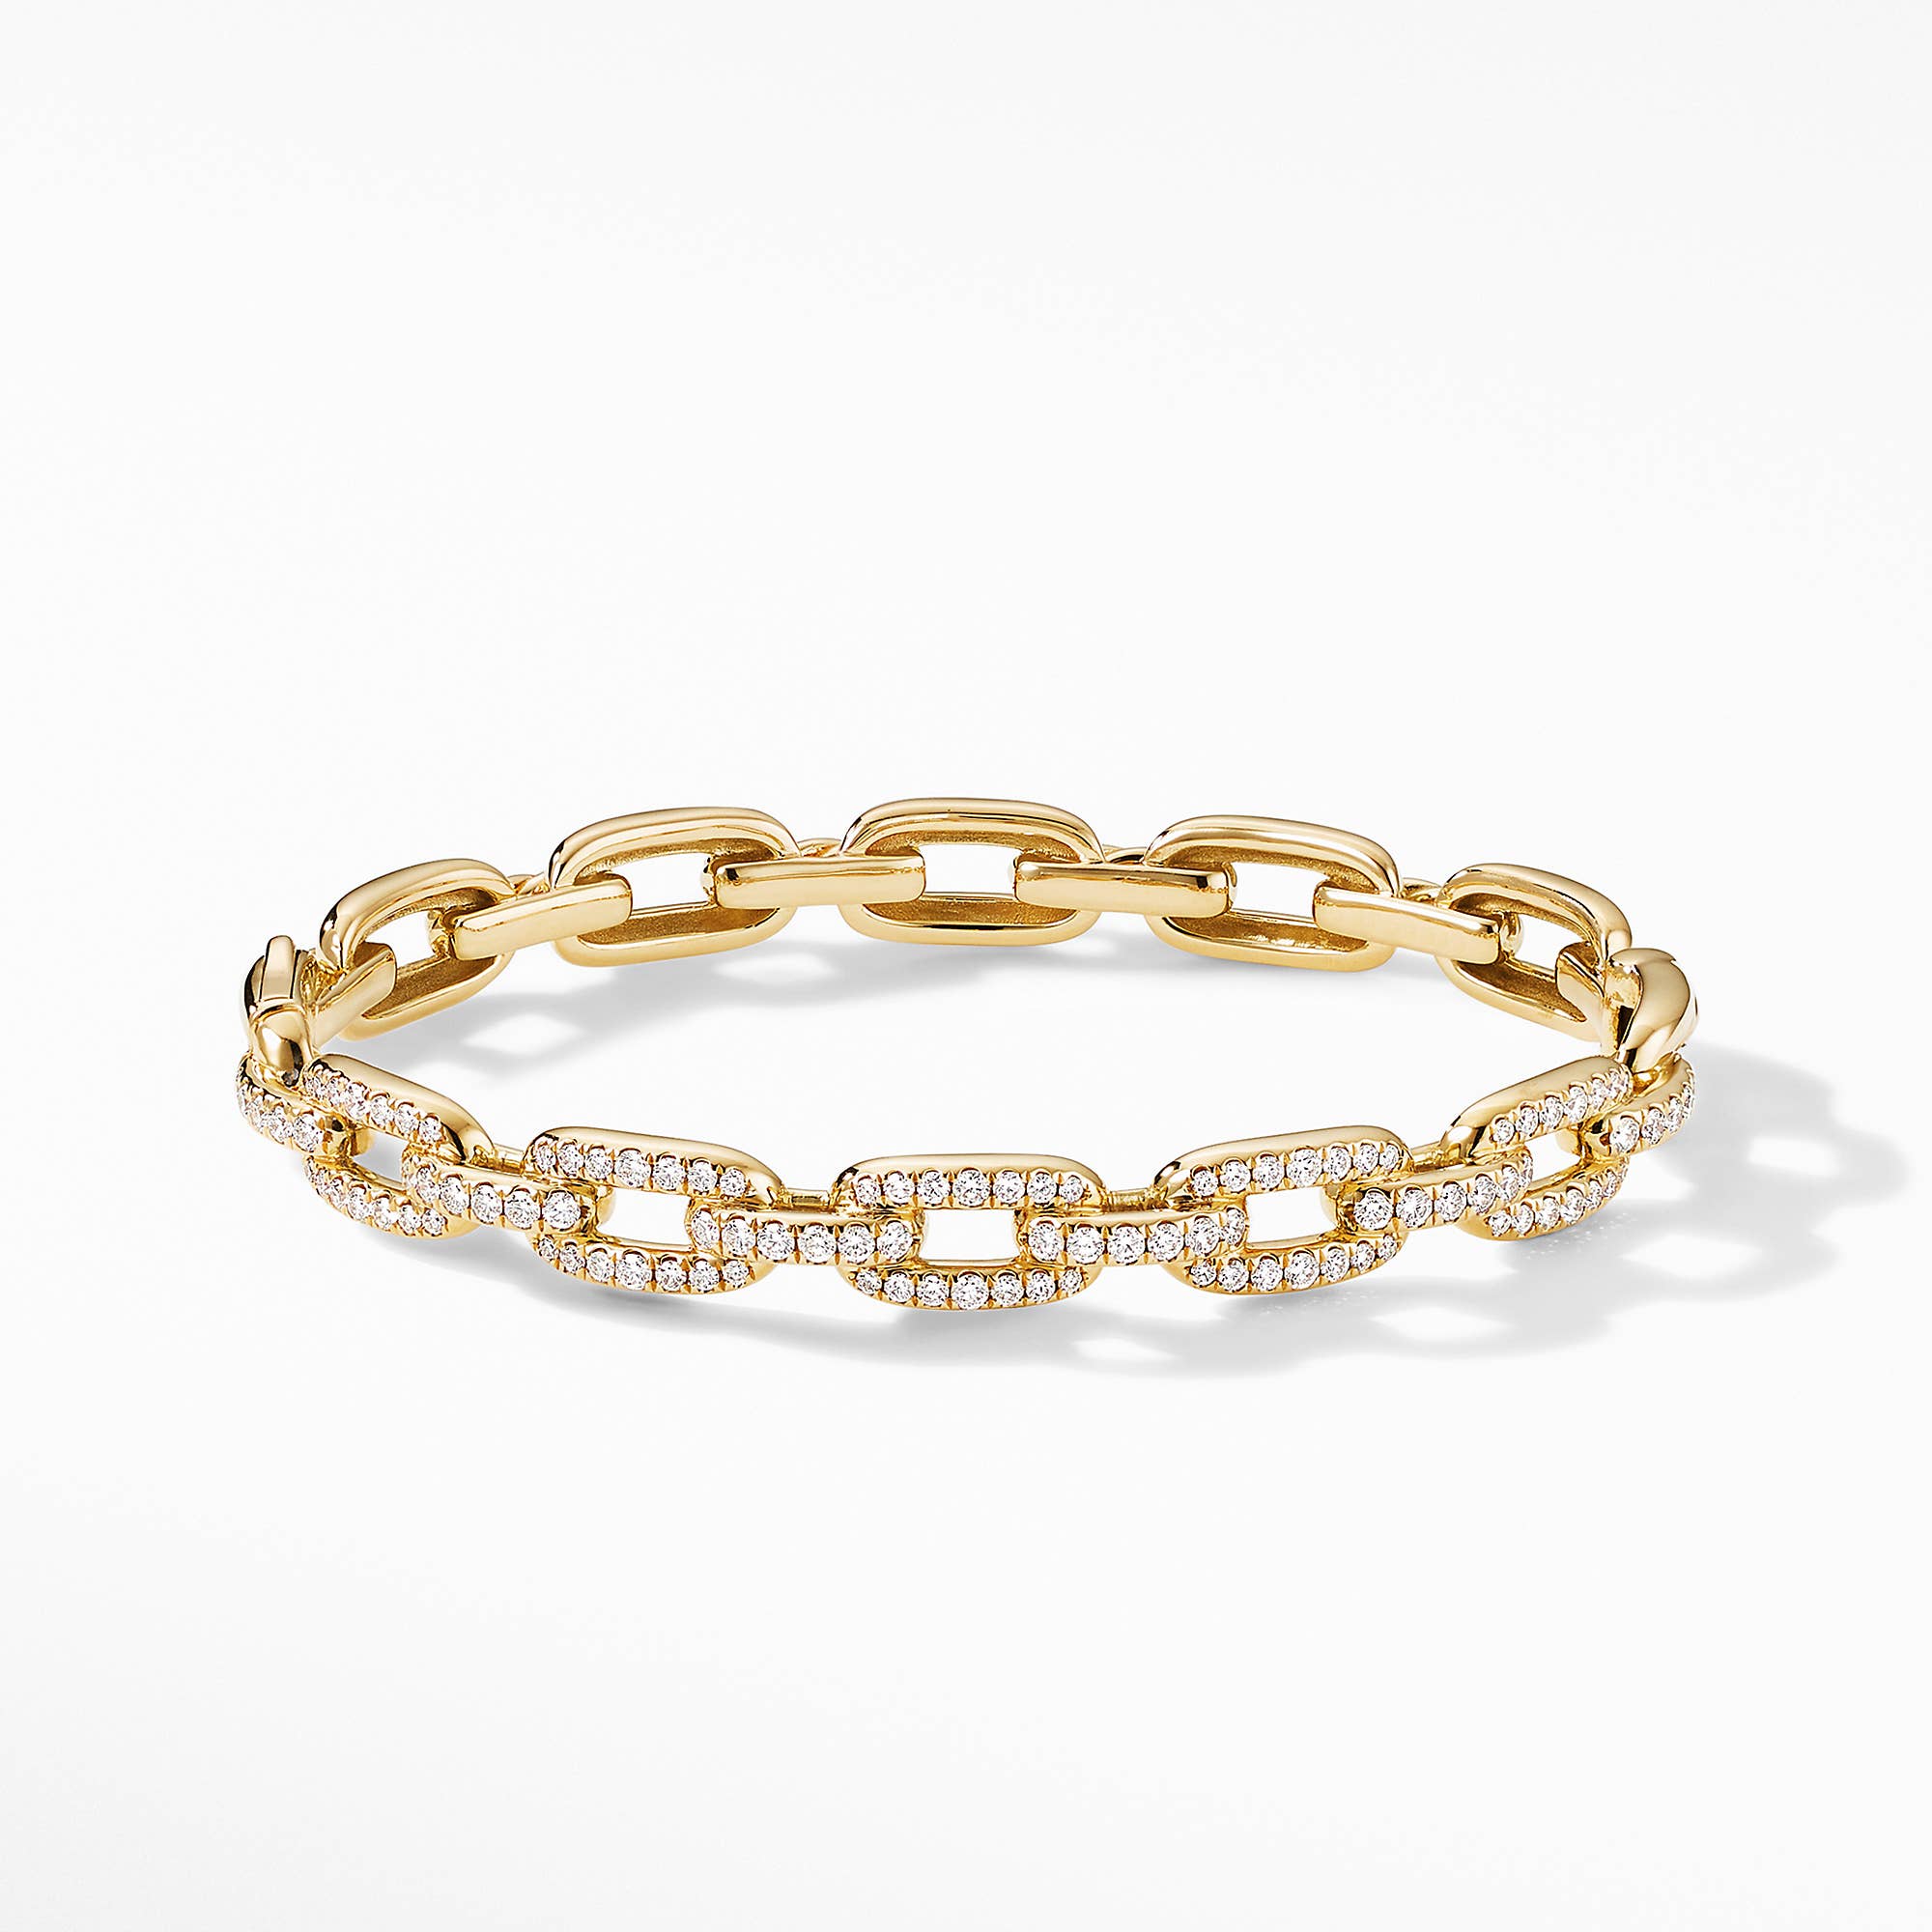 Shop Stax chain link bracelet